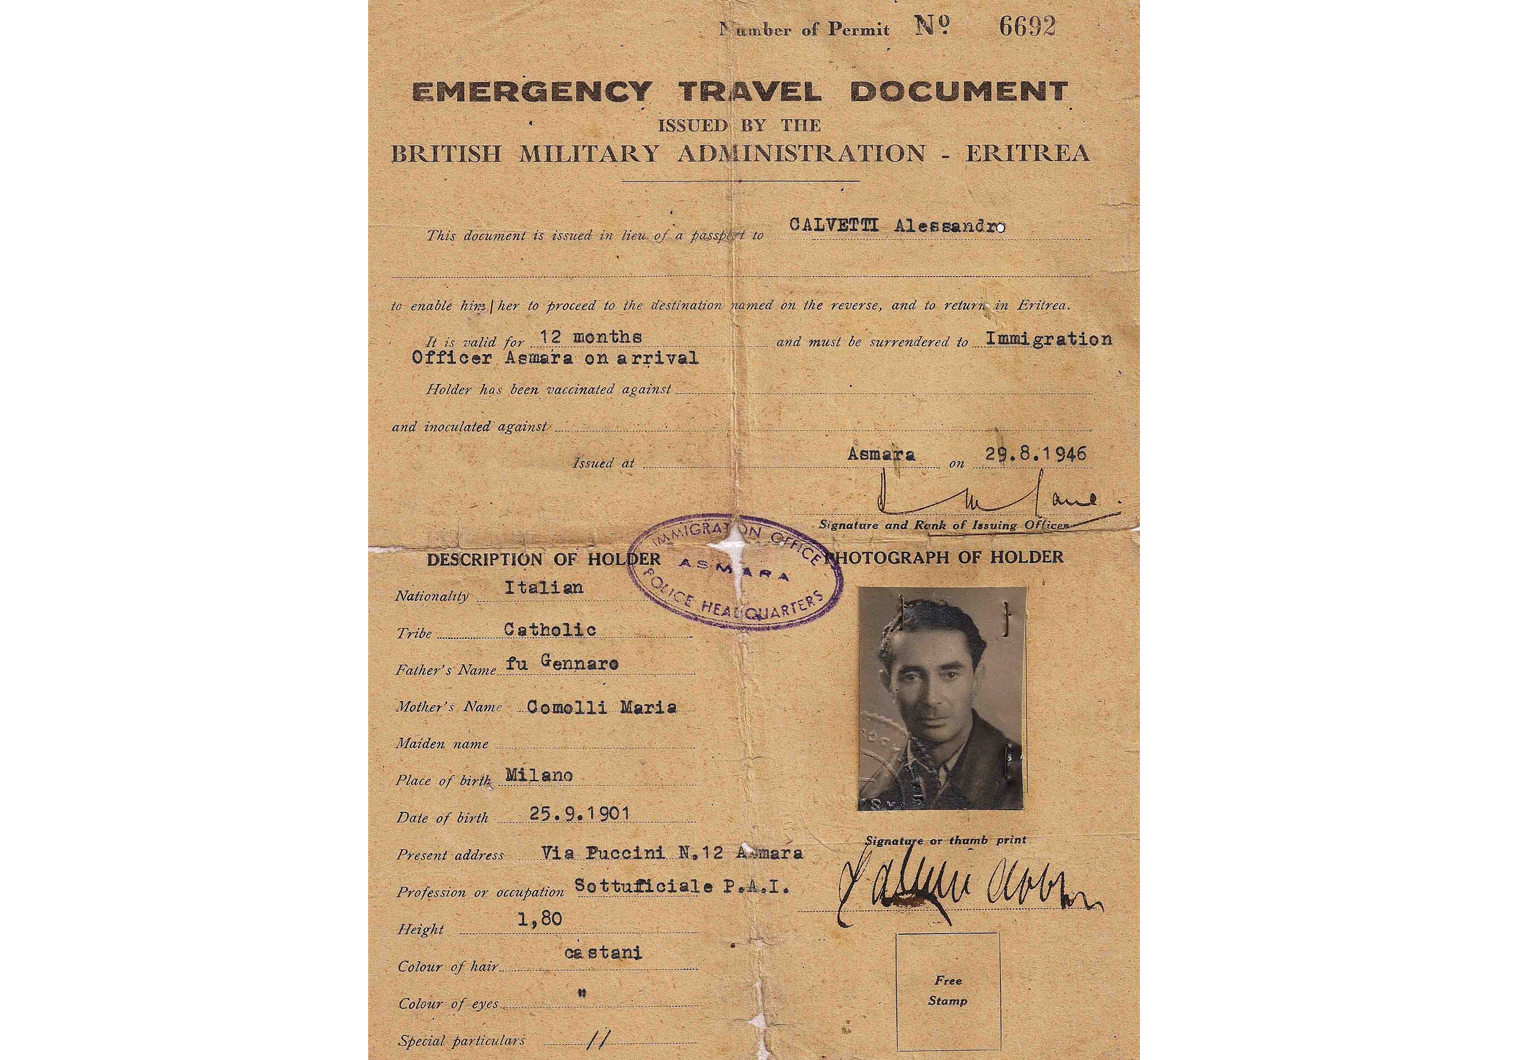 British military administration travel document